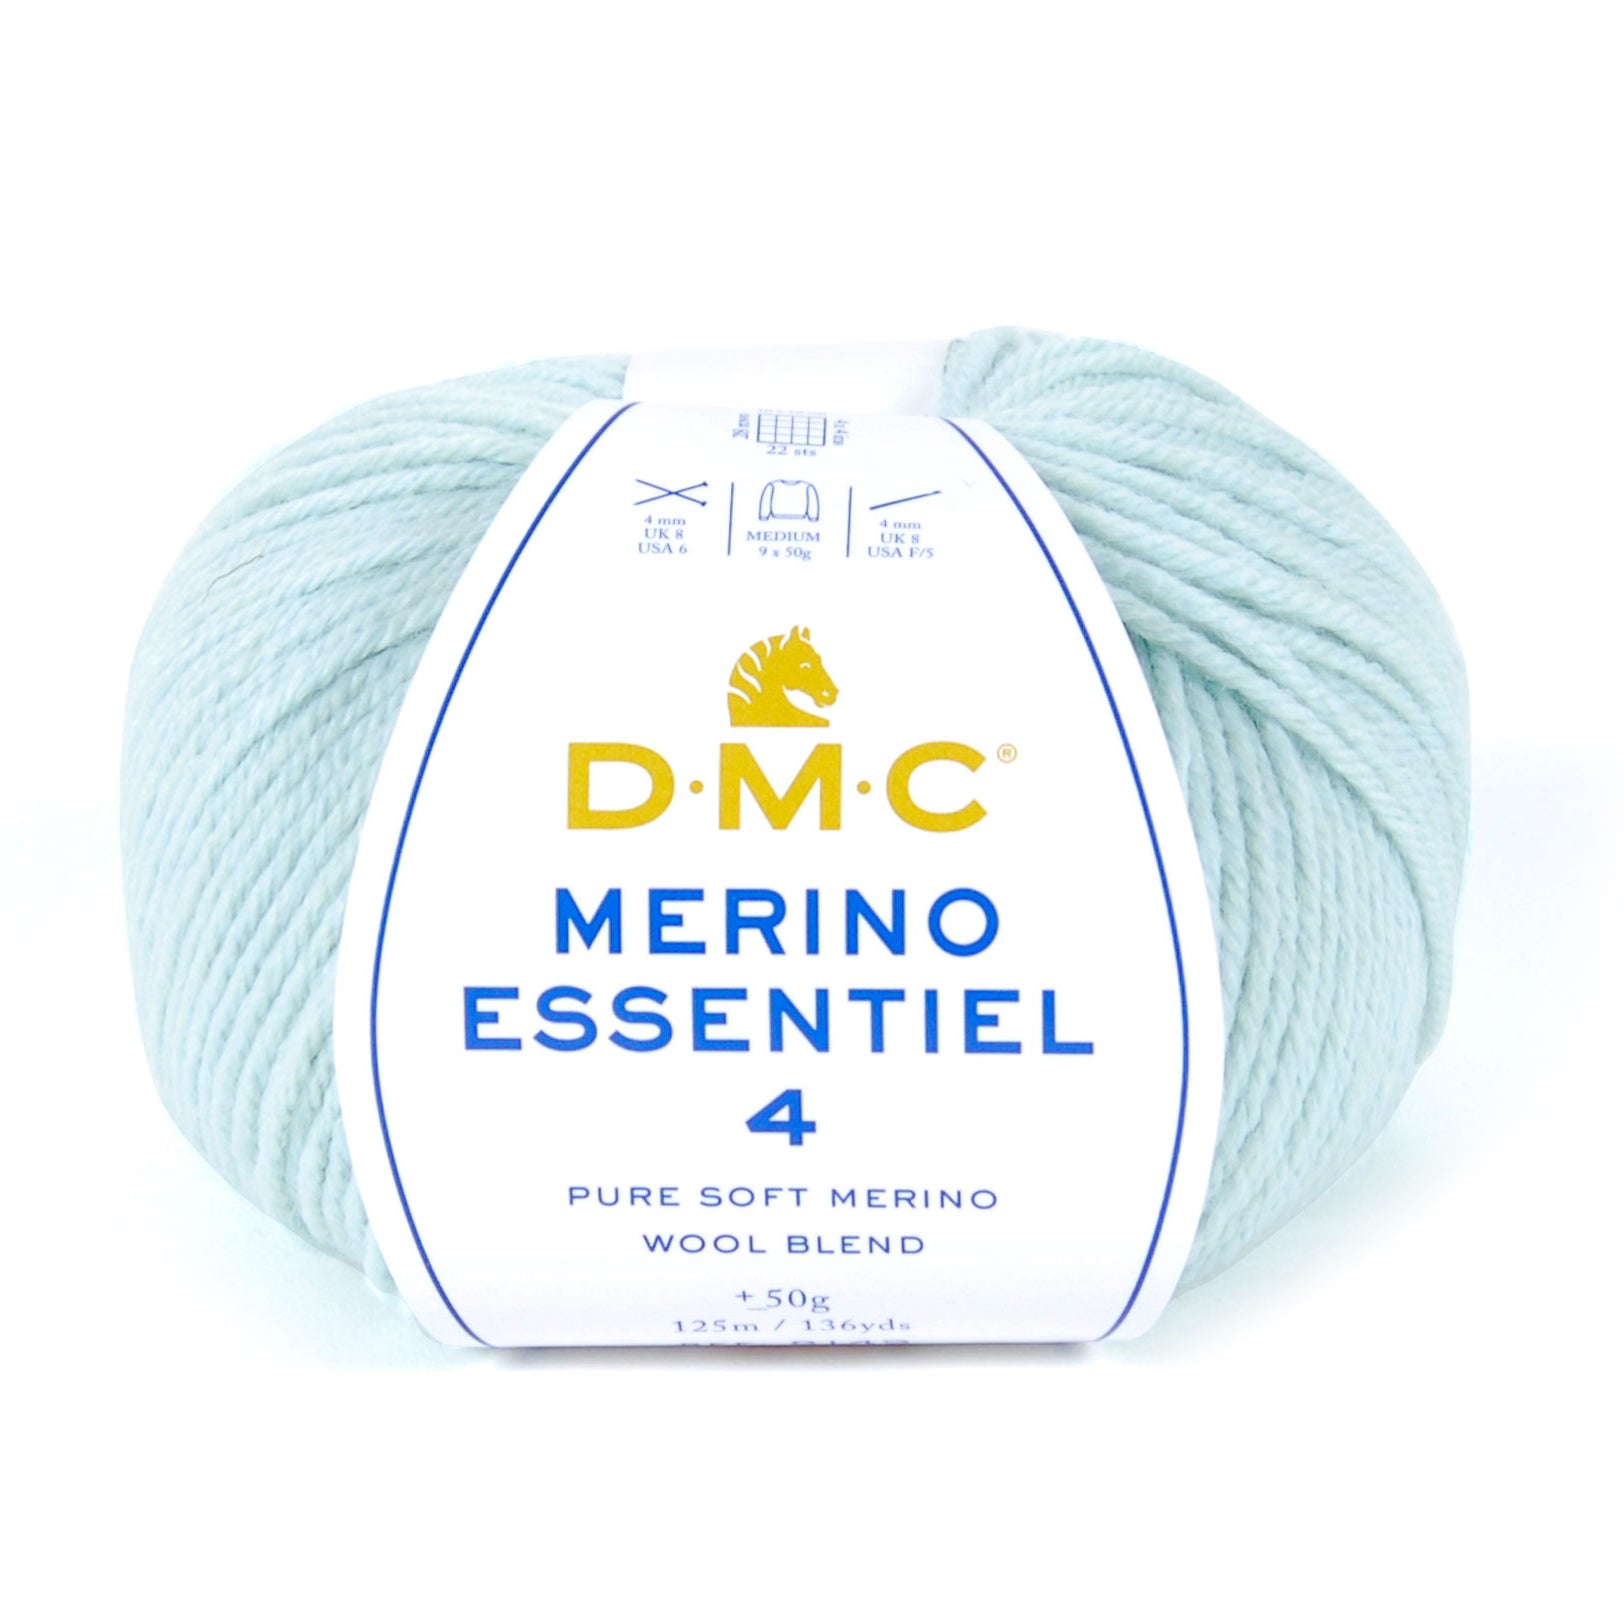 DMC Merino Essentiel 4 - Soft and light yarn made of high quality Merino wool and acrylic